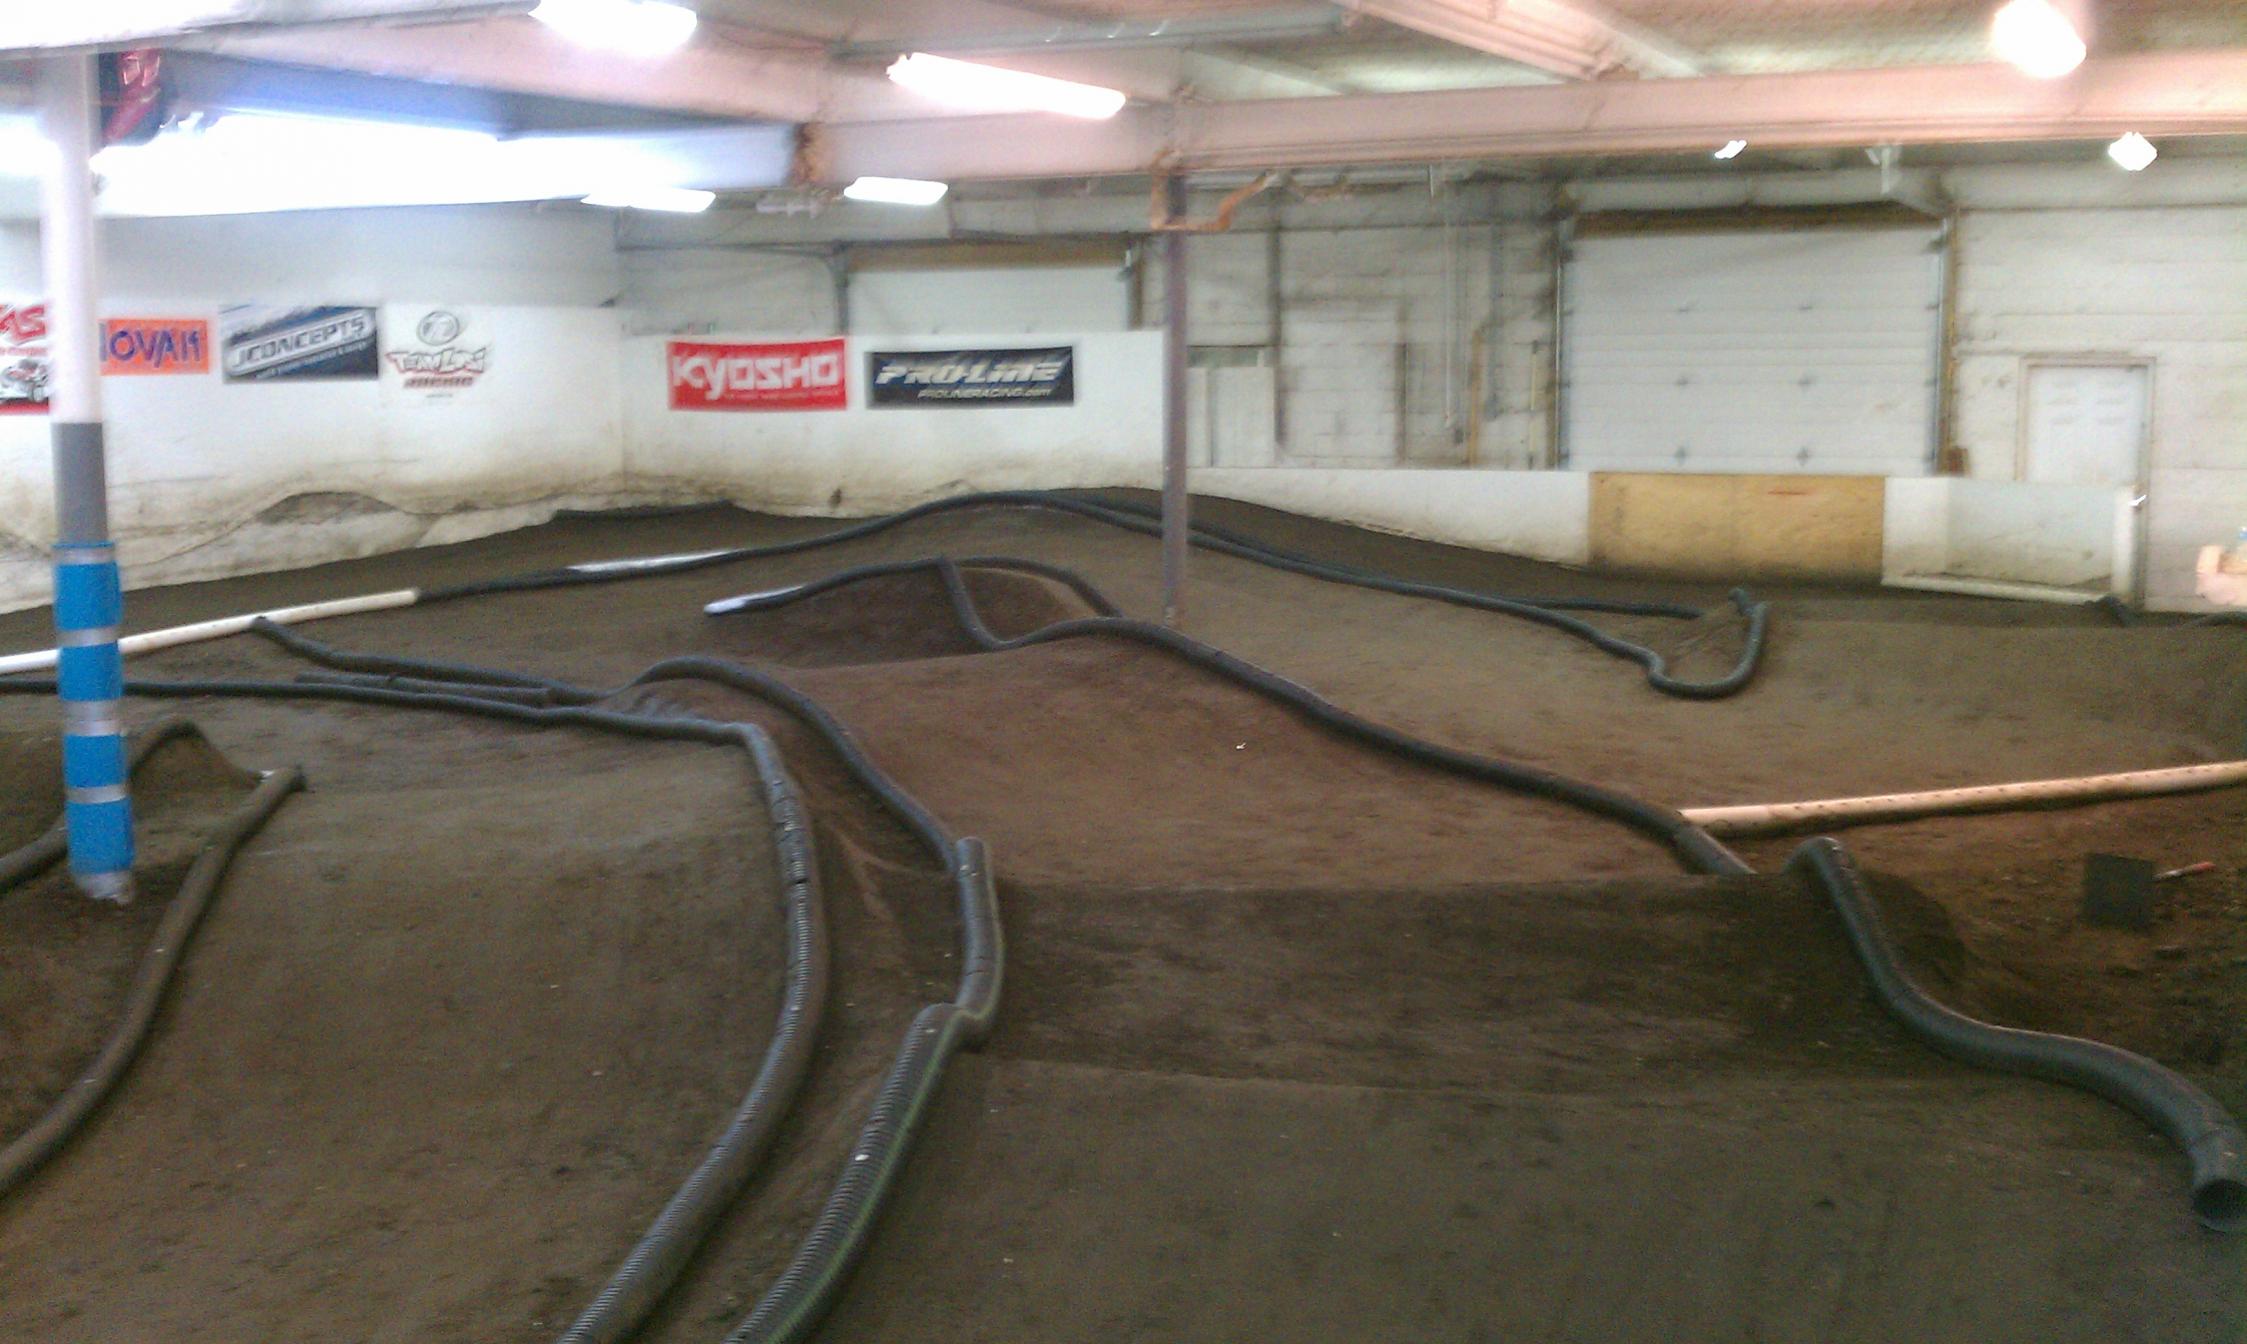 fastlane raceway dirt oval